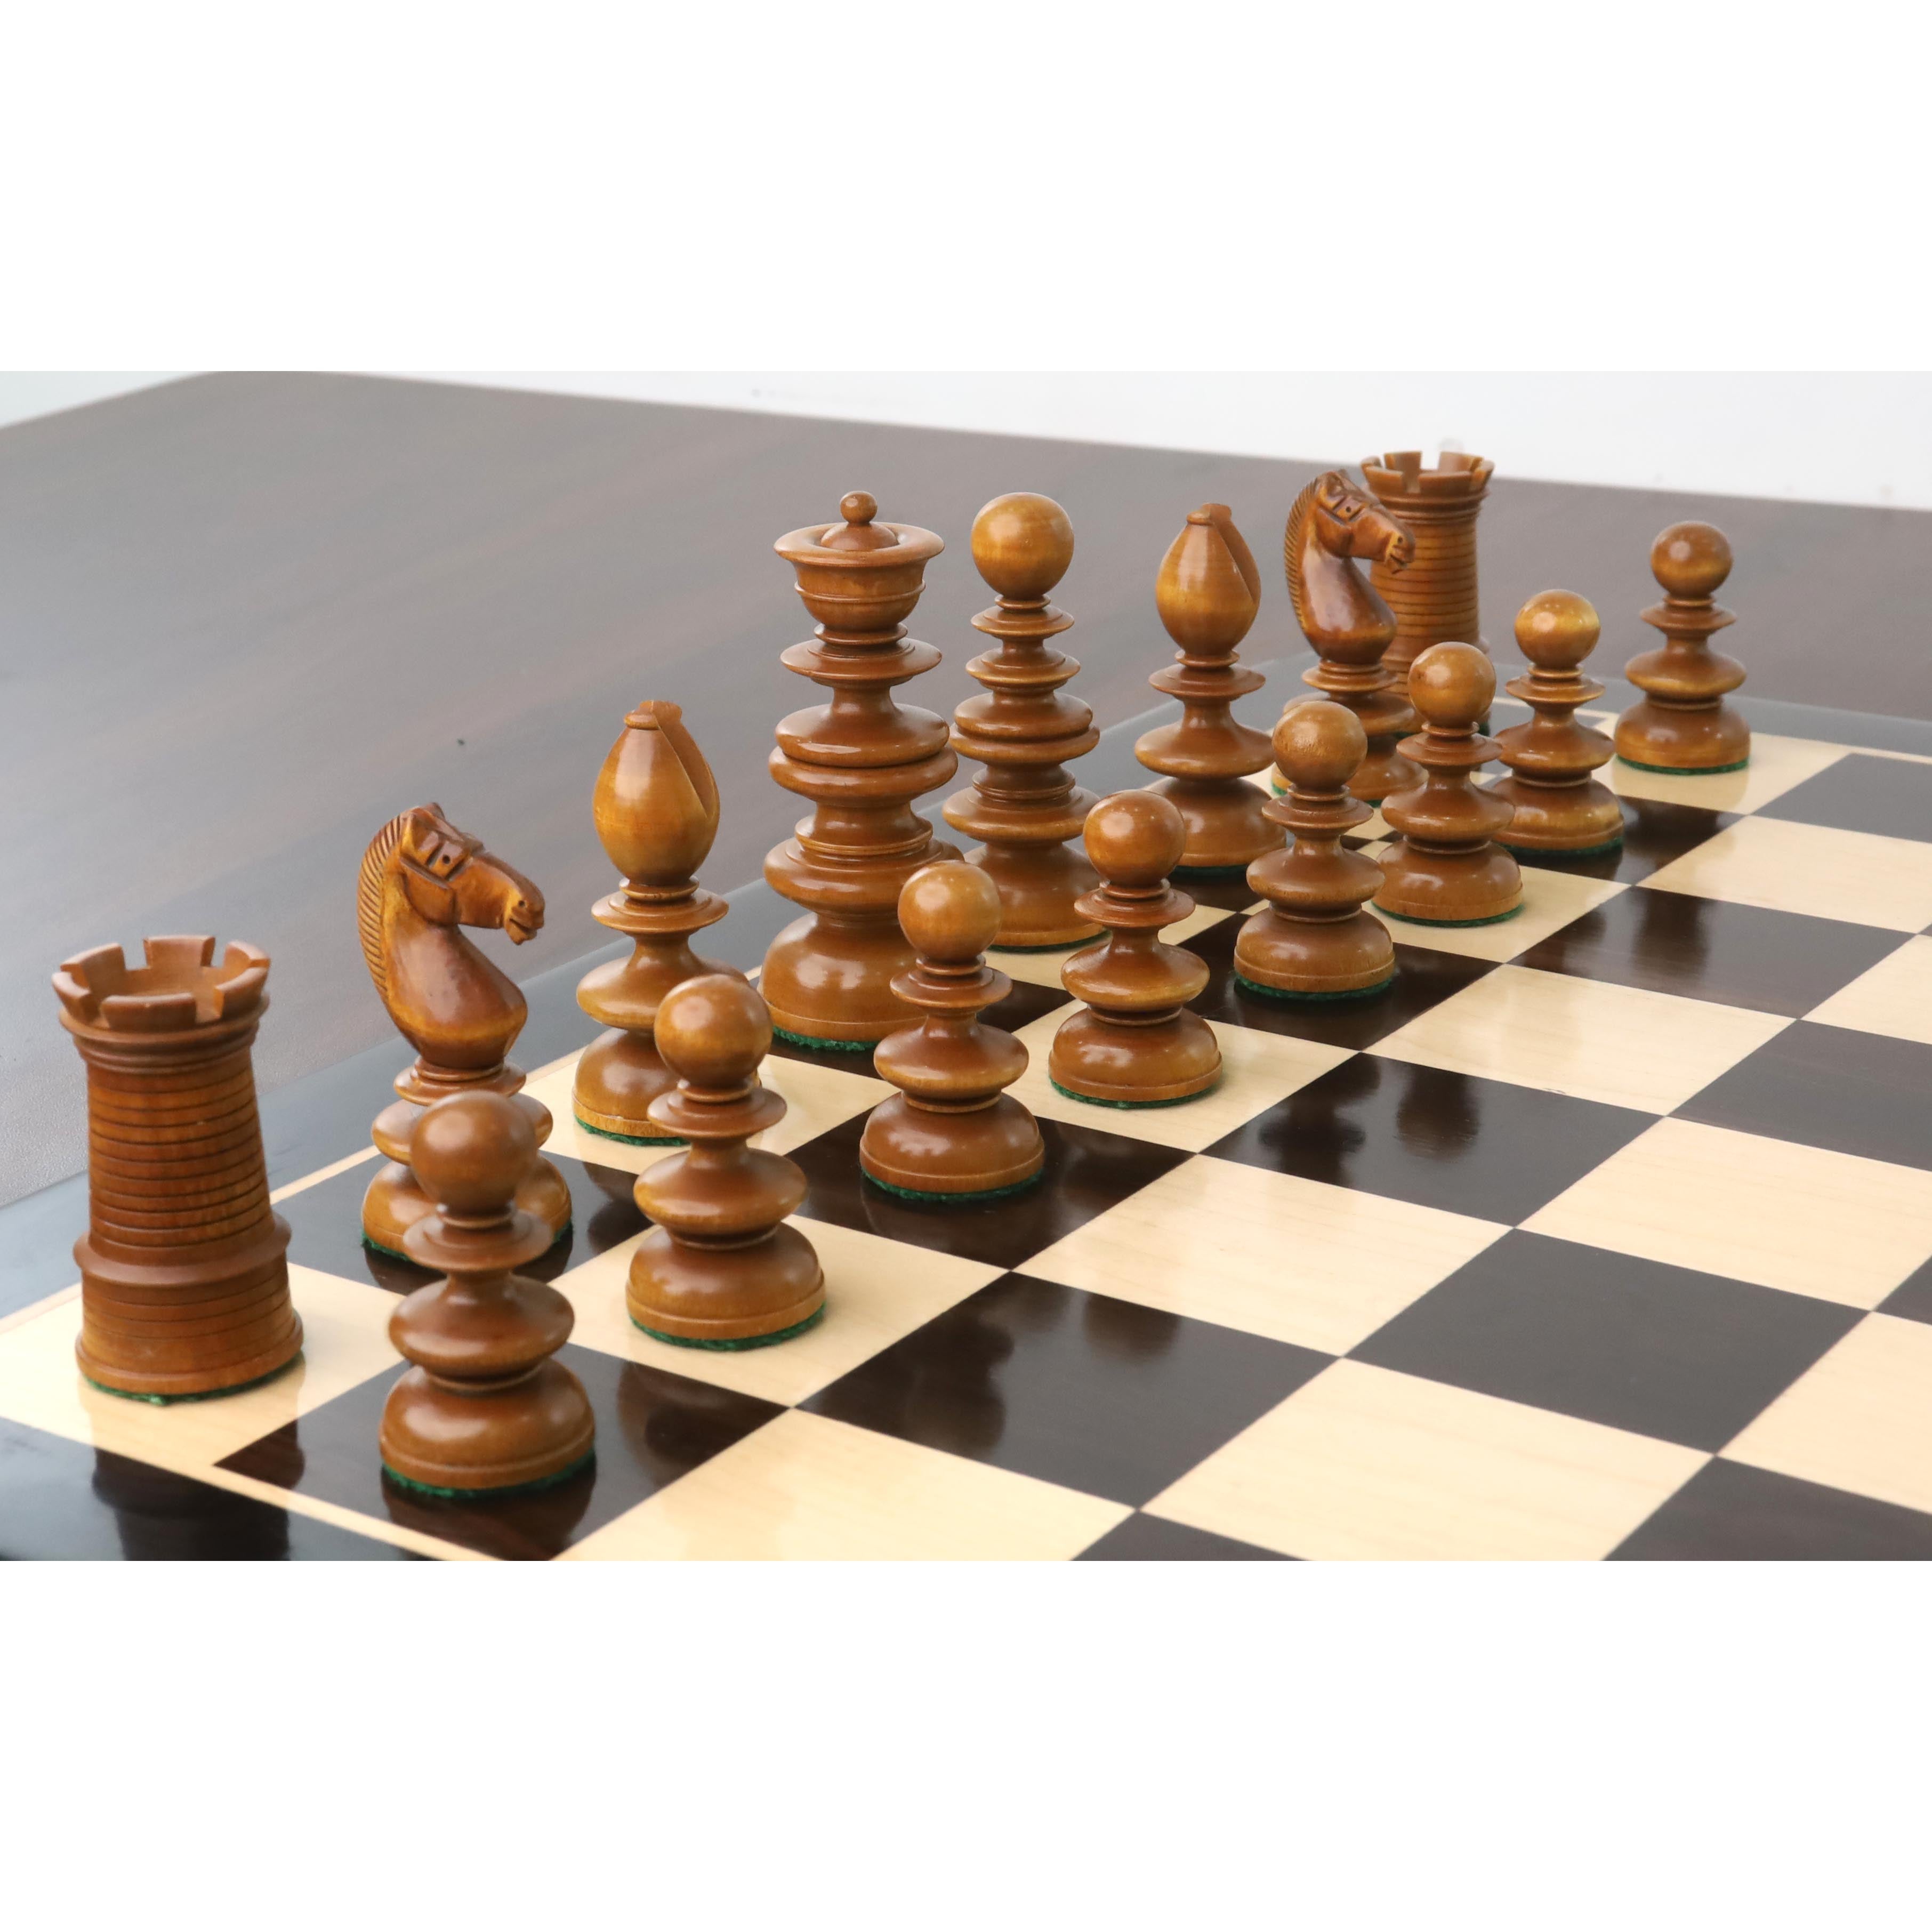 Slightly Imperfect 3.3" St. John Pre-Staunton Calvert Chess Pieces Only set - Ebony Wood & Antique